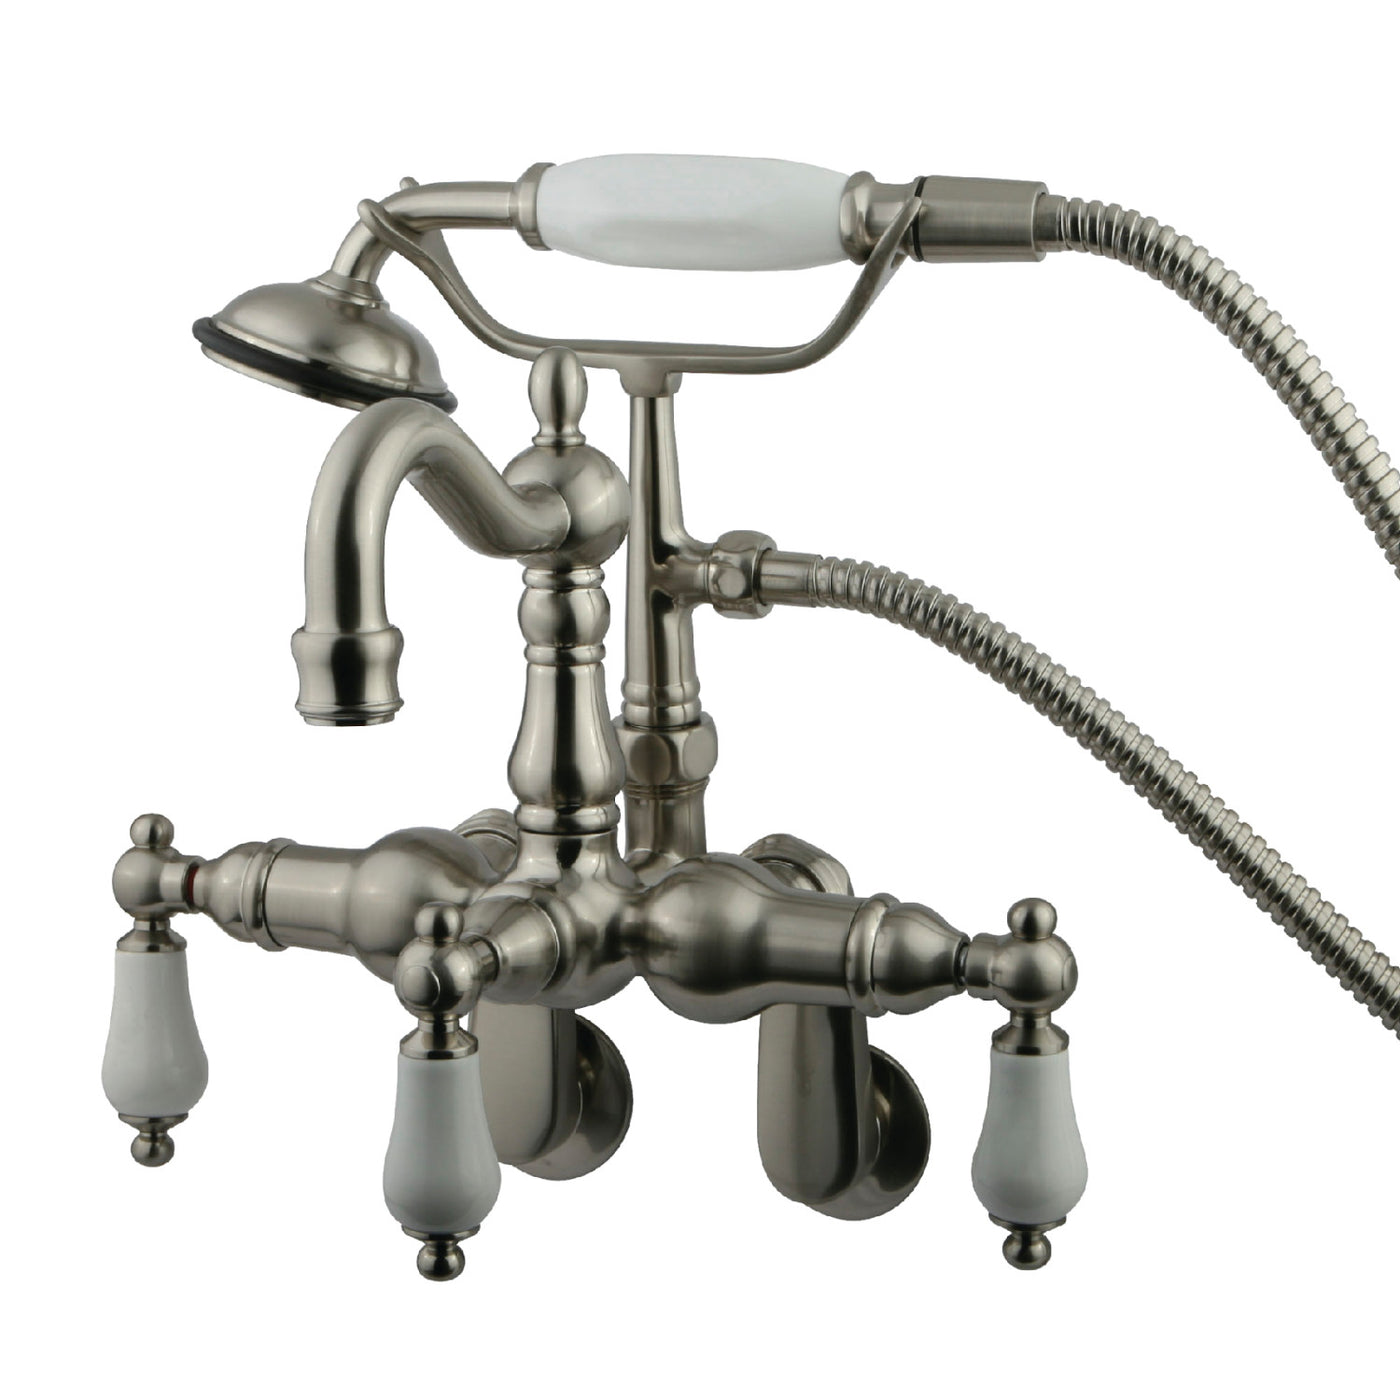 Elements of Design DT13018PL Adjustable Center Wall Mount Tub Faucet with Hand Shower, Brushed Nickel